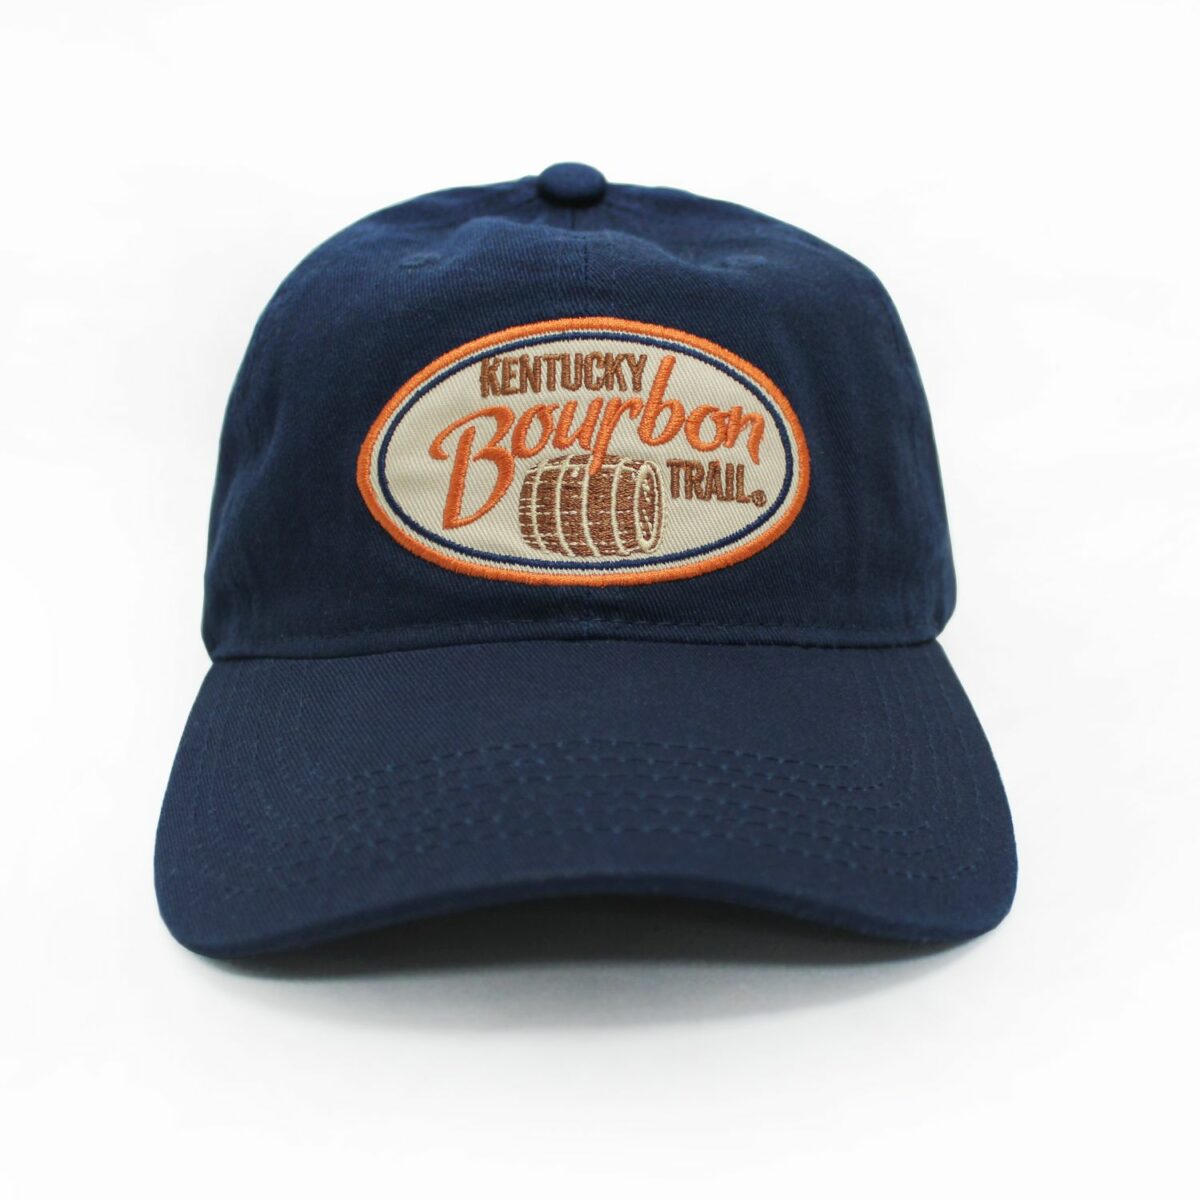 Kentucky Bourbon Trail Navy Twill Hat